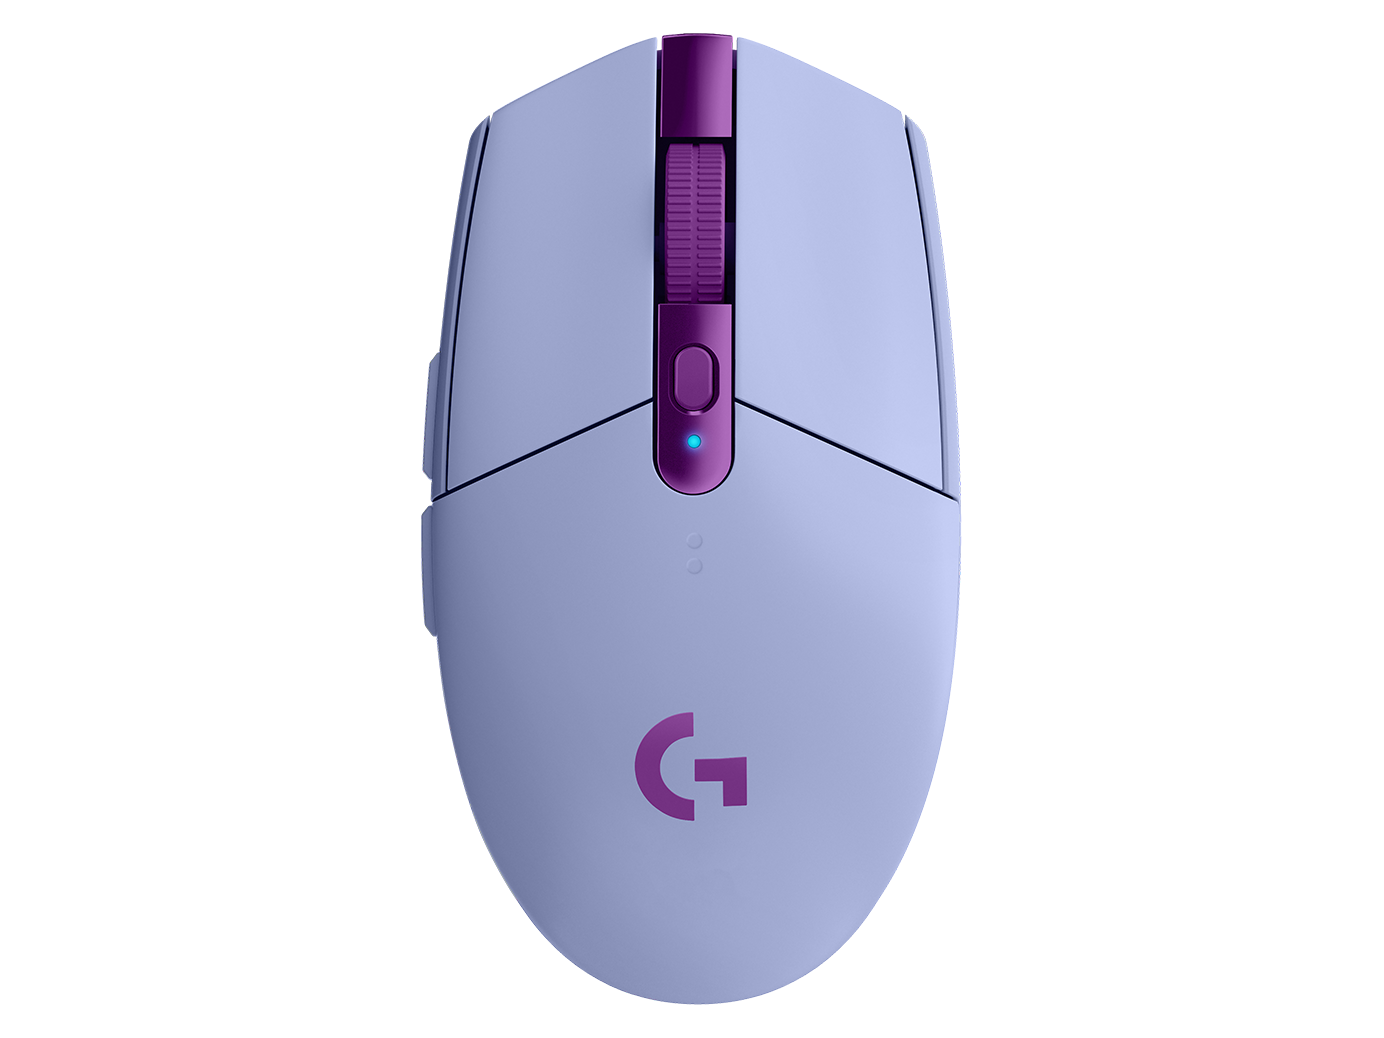 Logitech Lightspeed Wireless Gaming Mouse